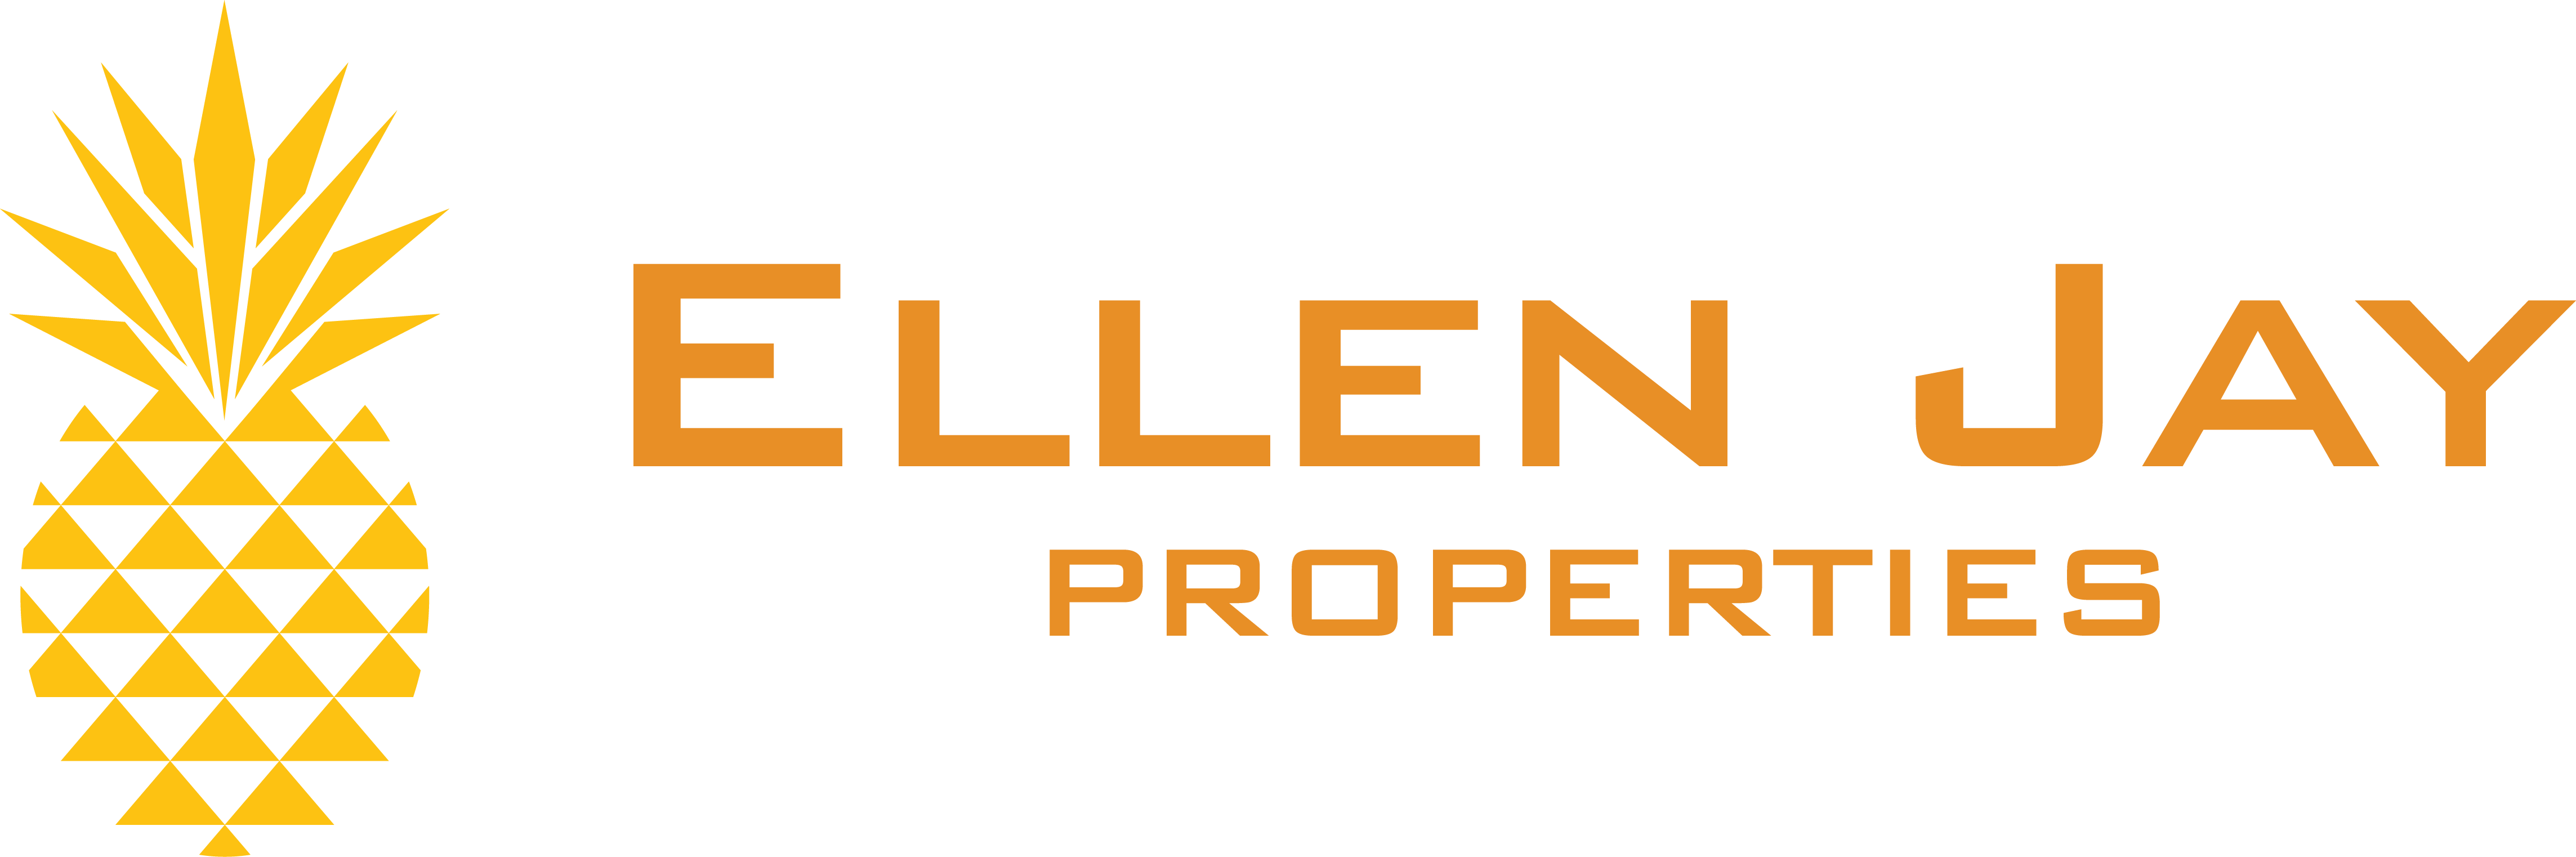 Contact Us - Ellen Jay Properties, LLC